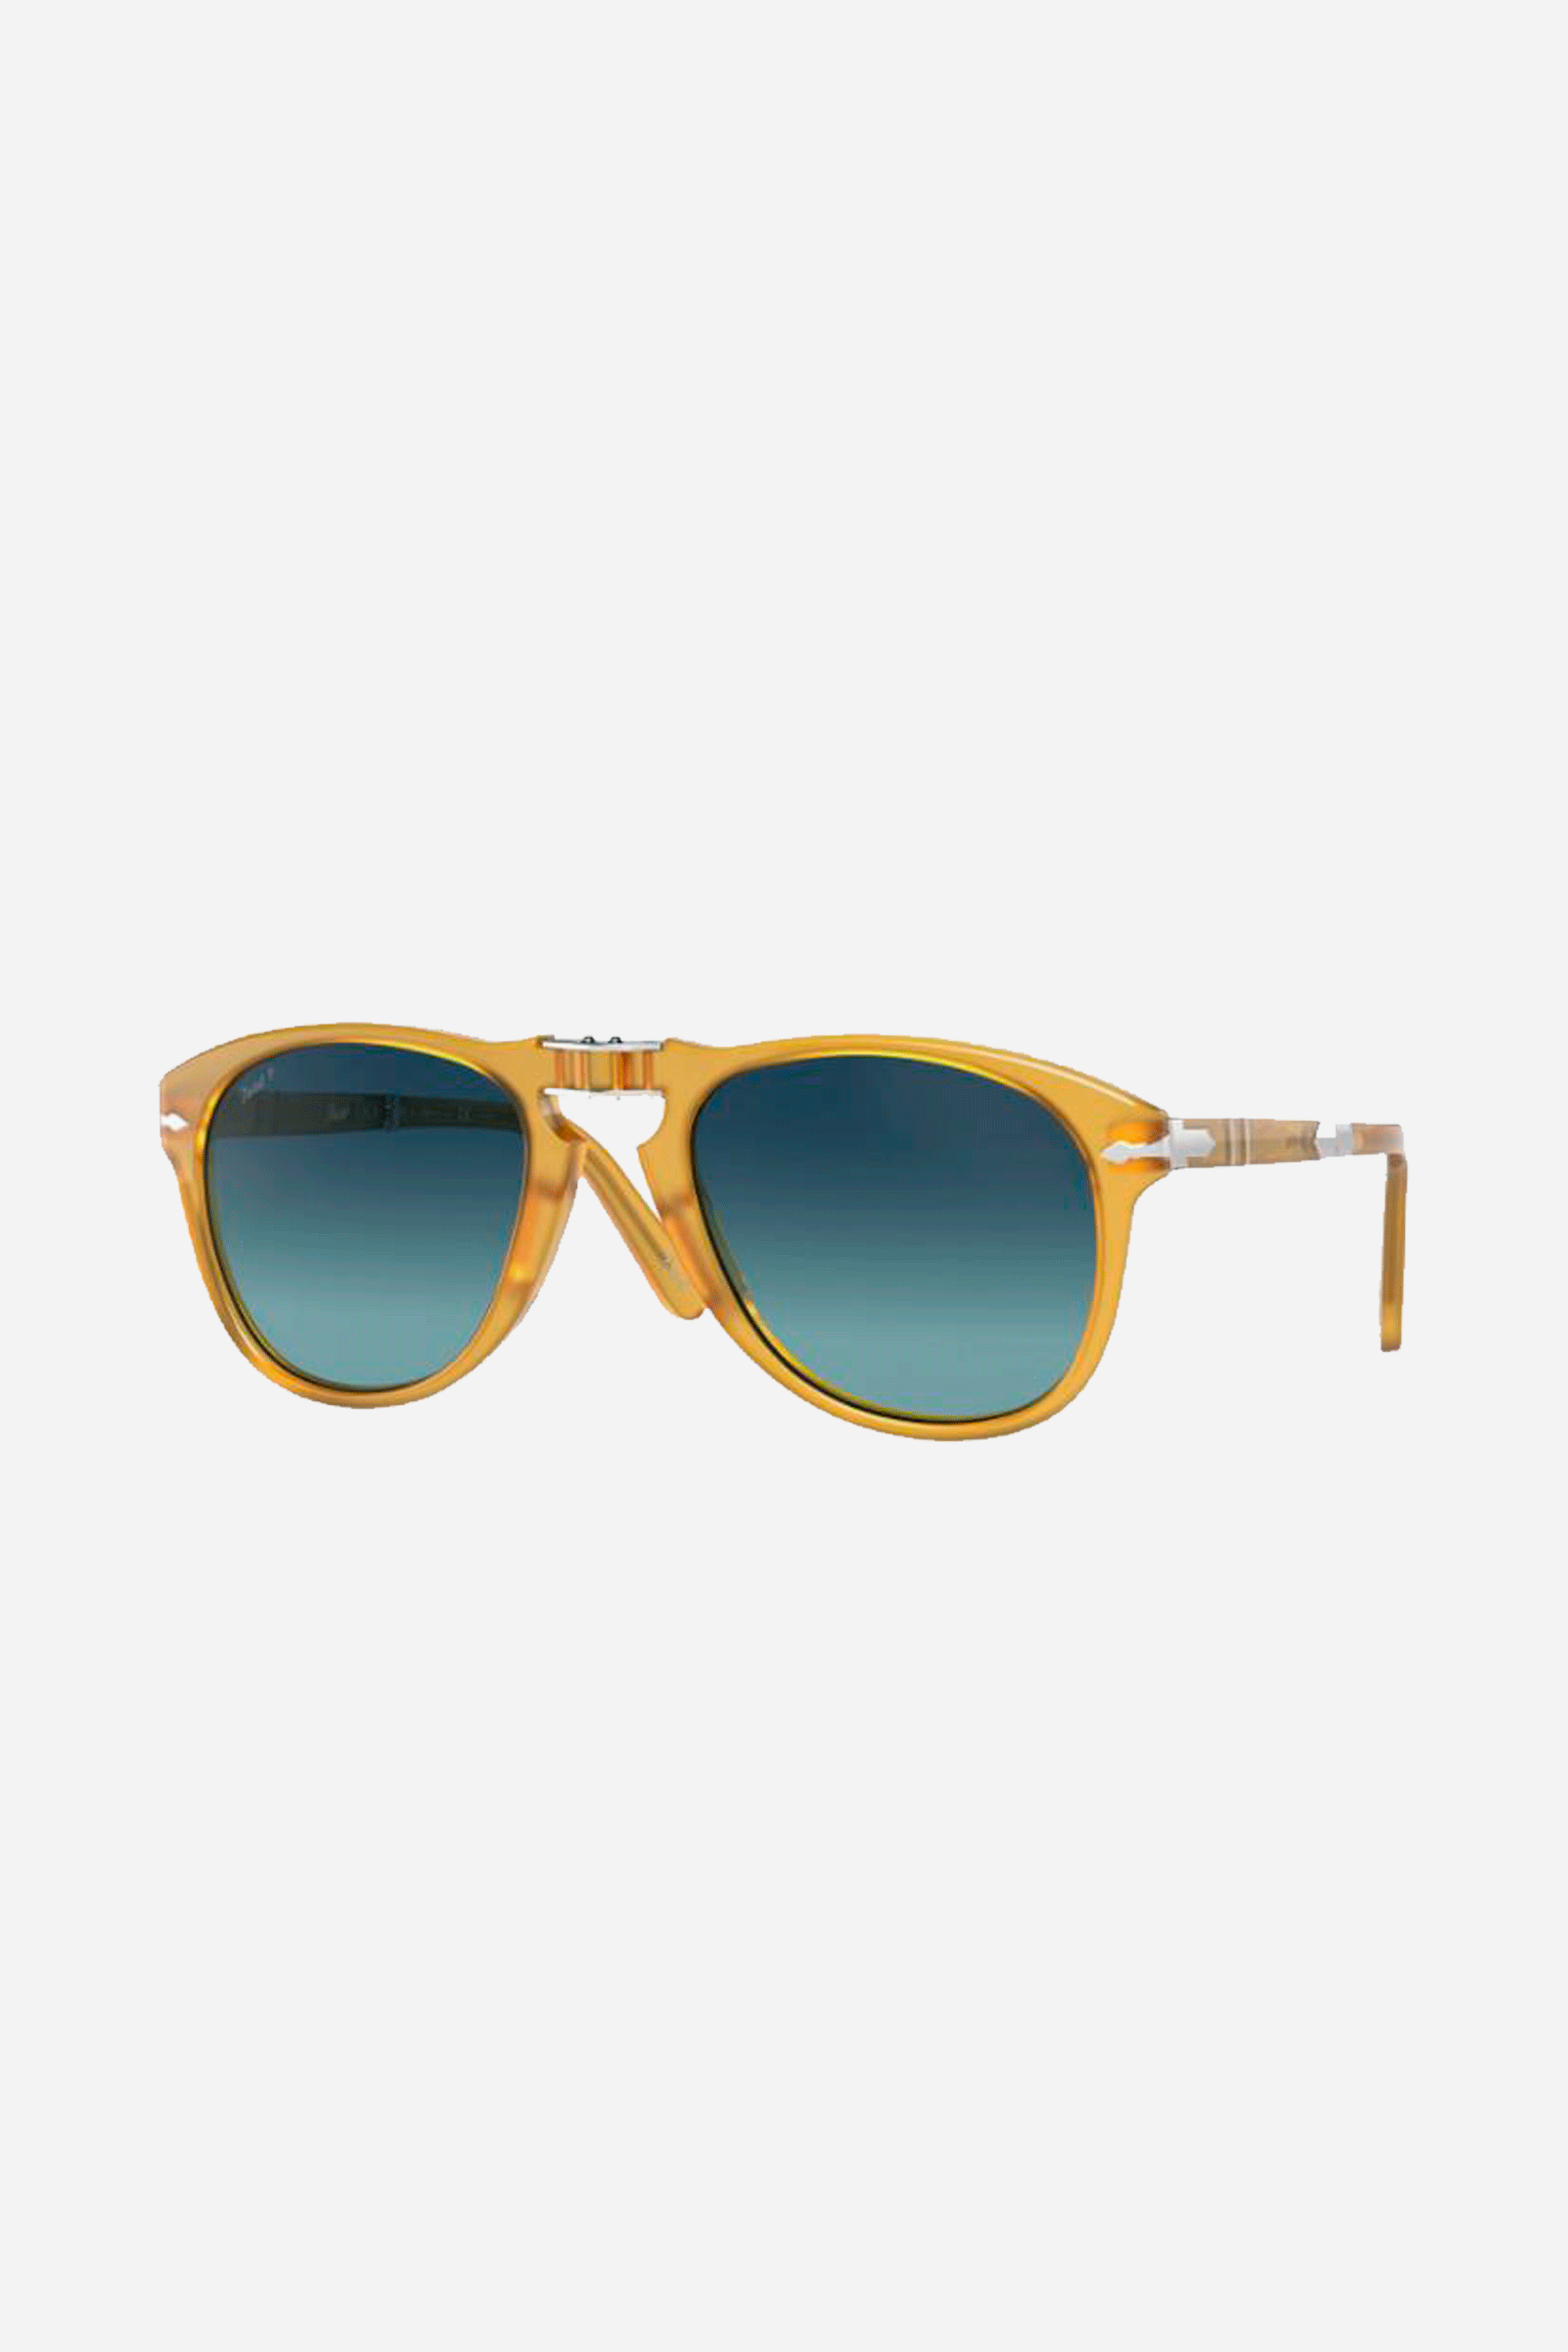 Persol pilot yellow sunglasses - Eyewear Club